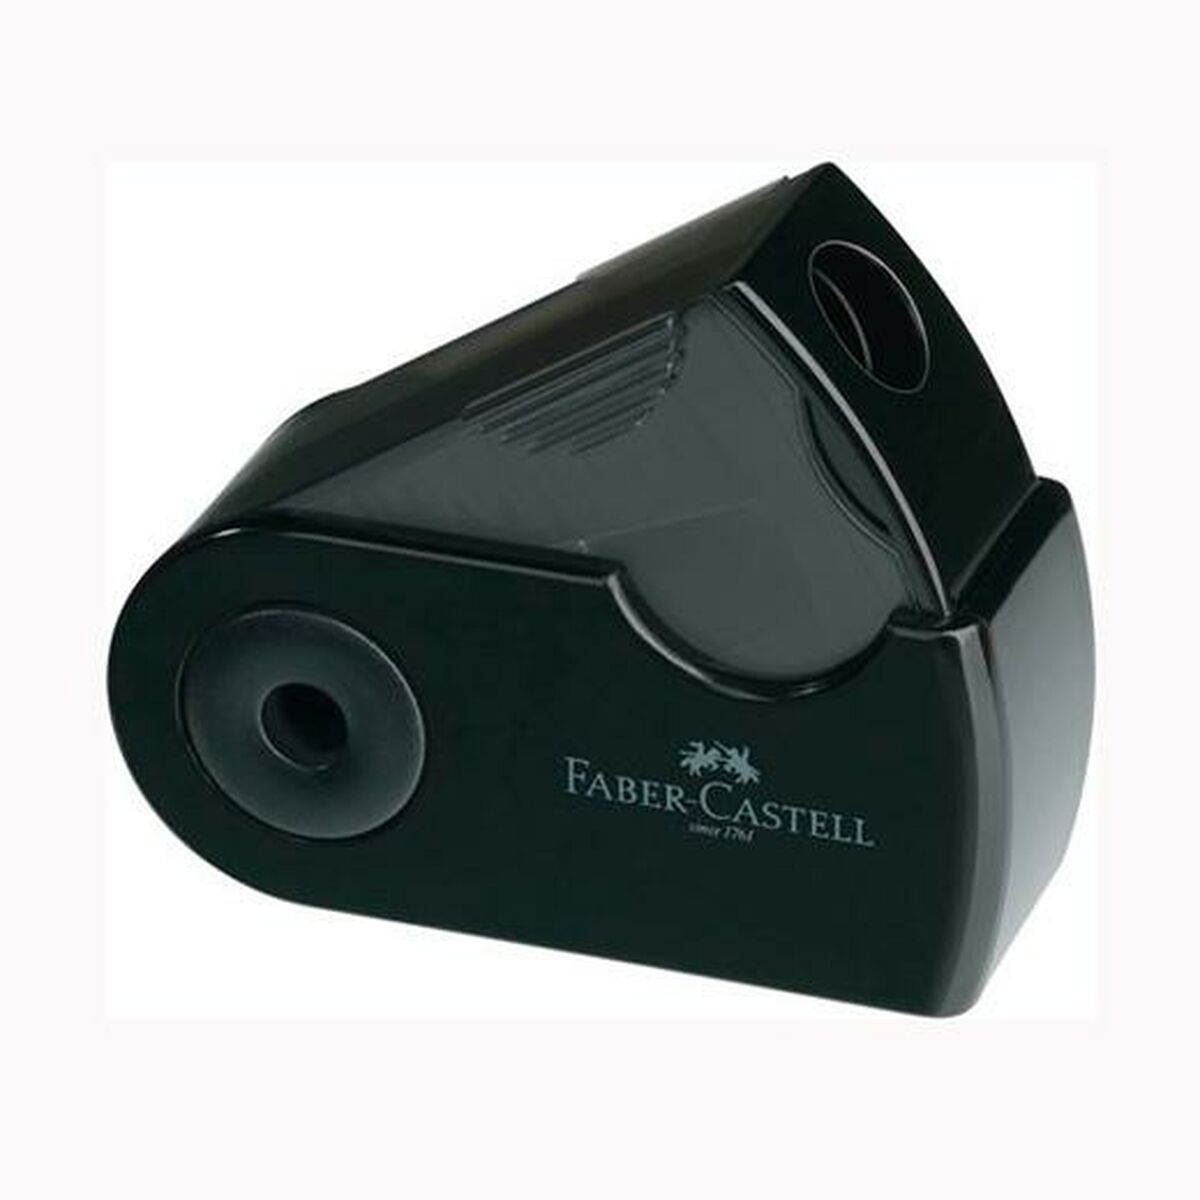 Faber-Castell Single Hole Sharpener - Black